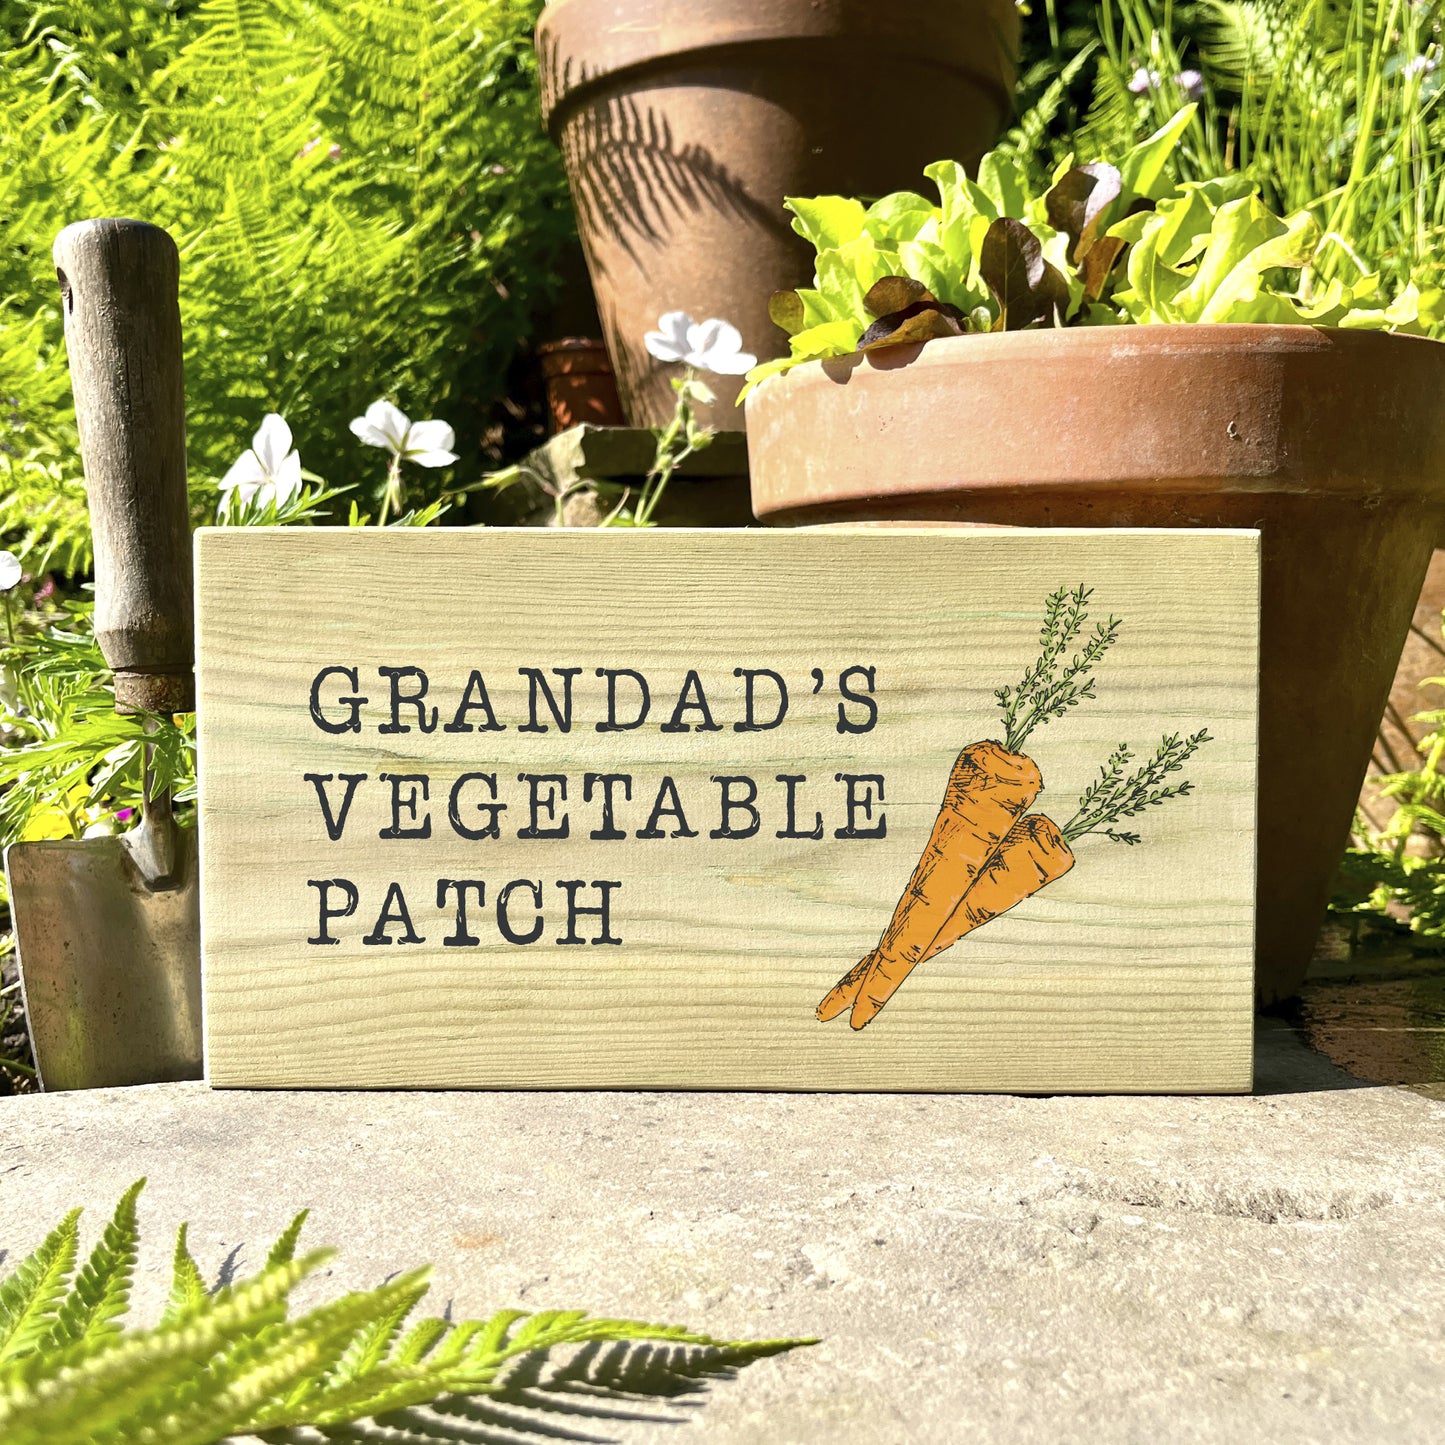 Grandad's Vegetable Patch Wooden Sign